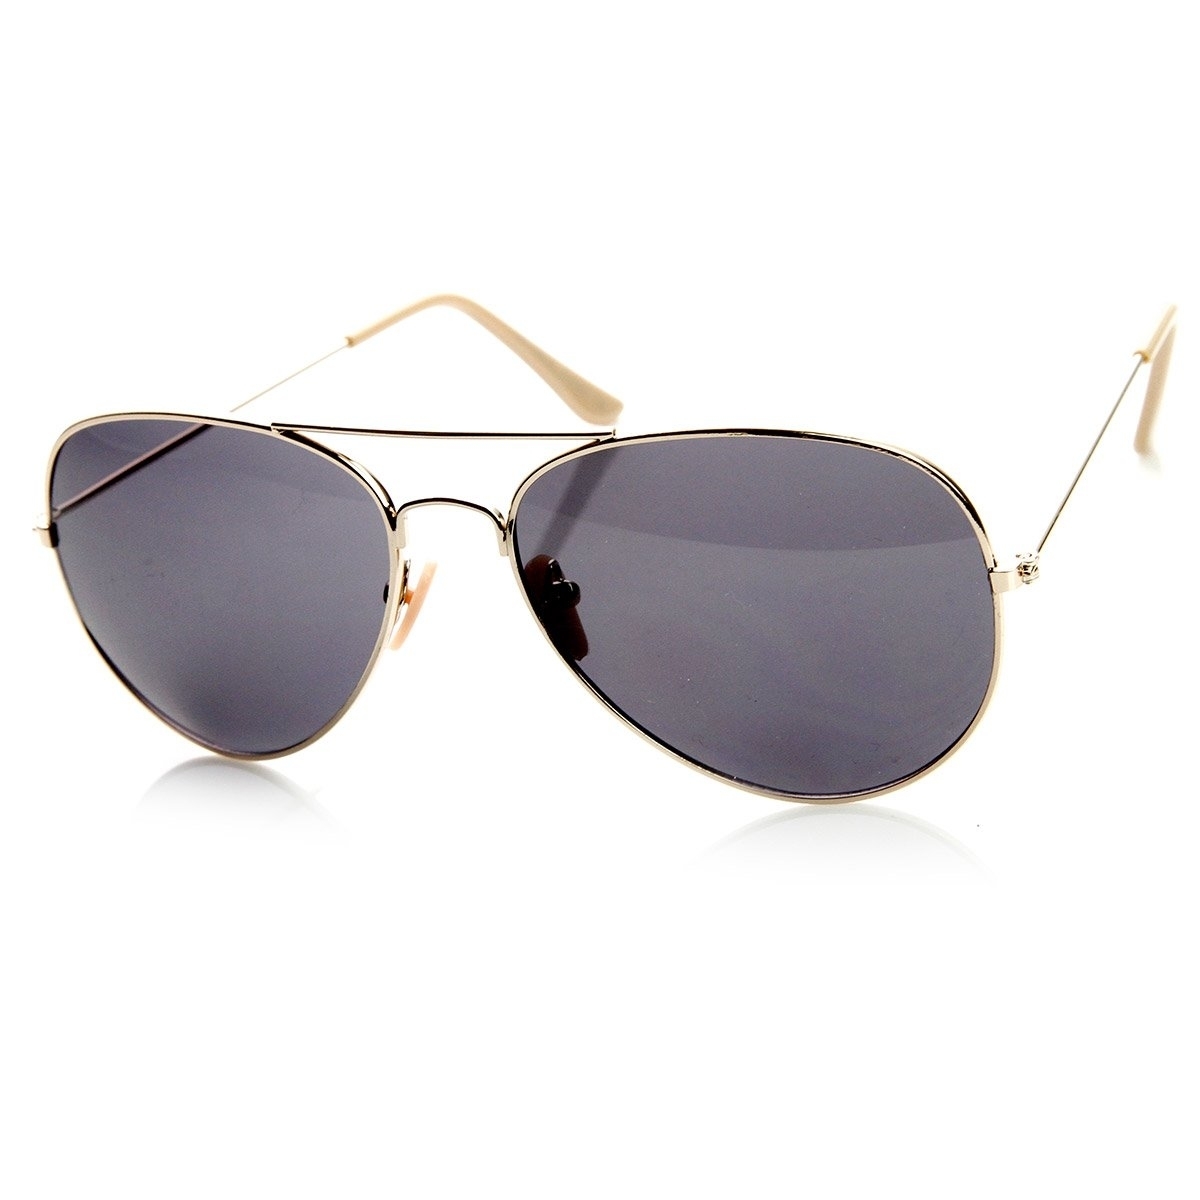 Original Basic Casual Fashion Metal Aviator Sunglasses - 56mm Lens - Gold Brown